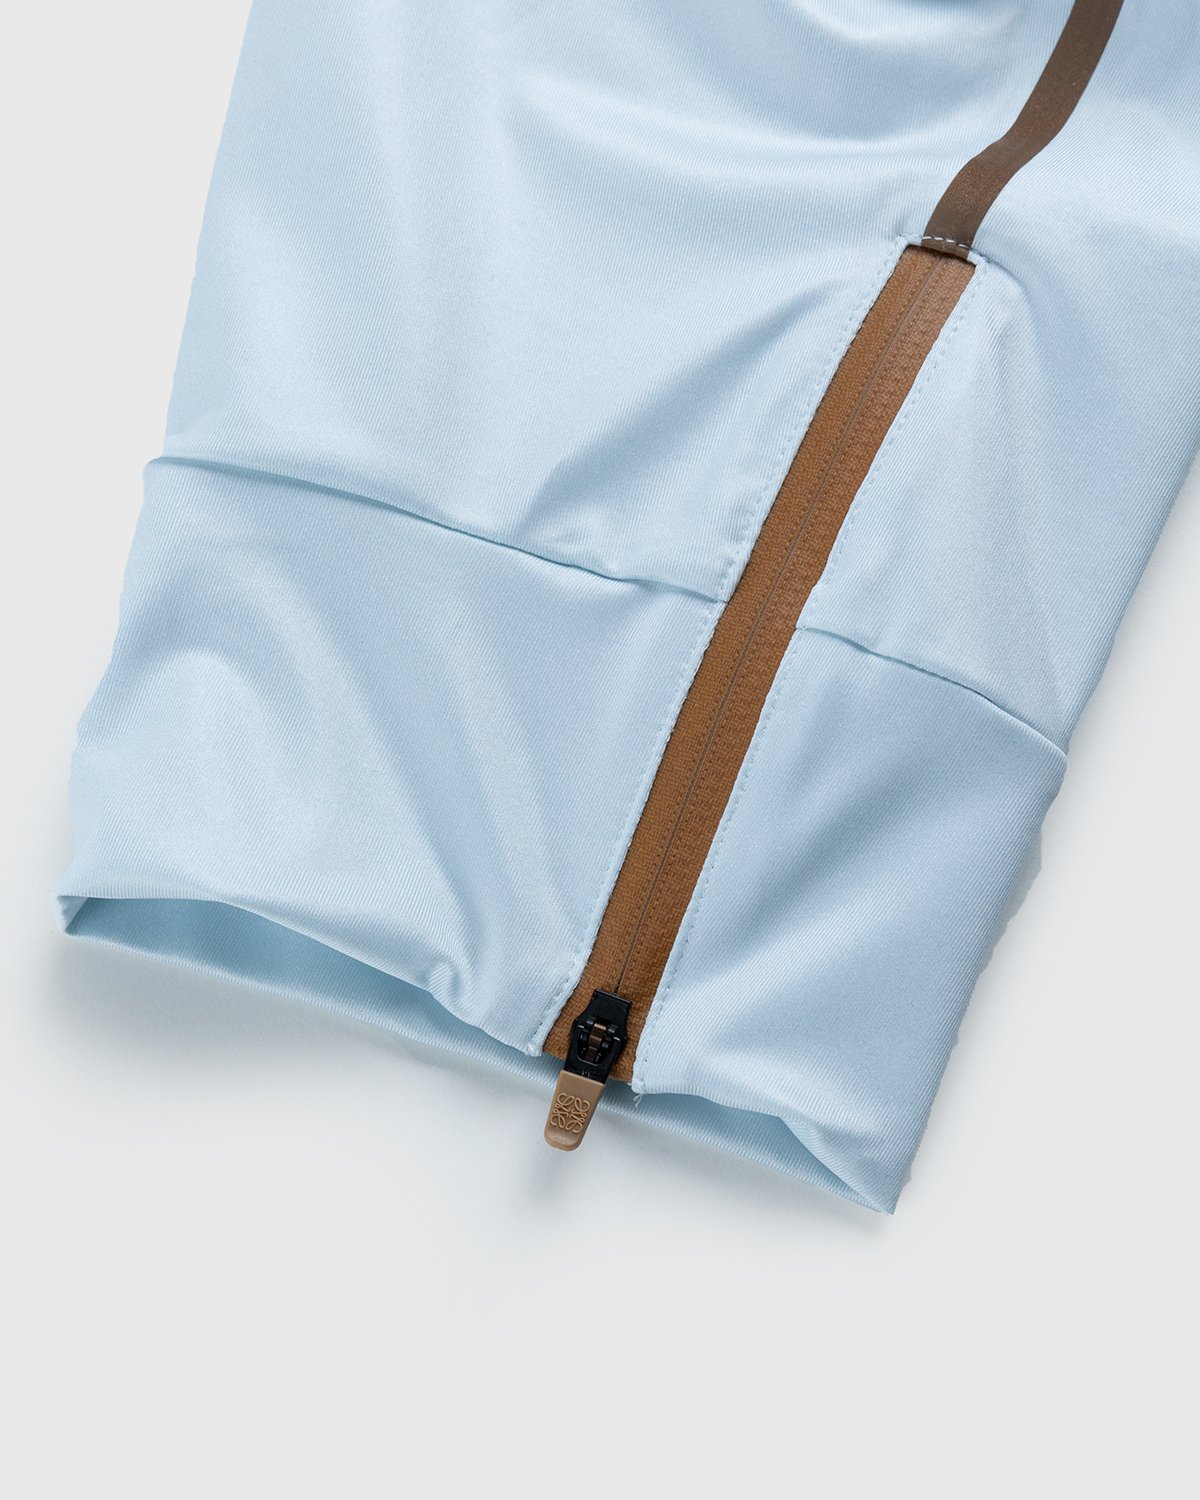 Loewe x On - Men's Technical Running Pants Gradient Grey - Clothing - Blue - Image 3